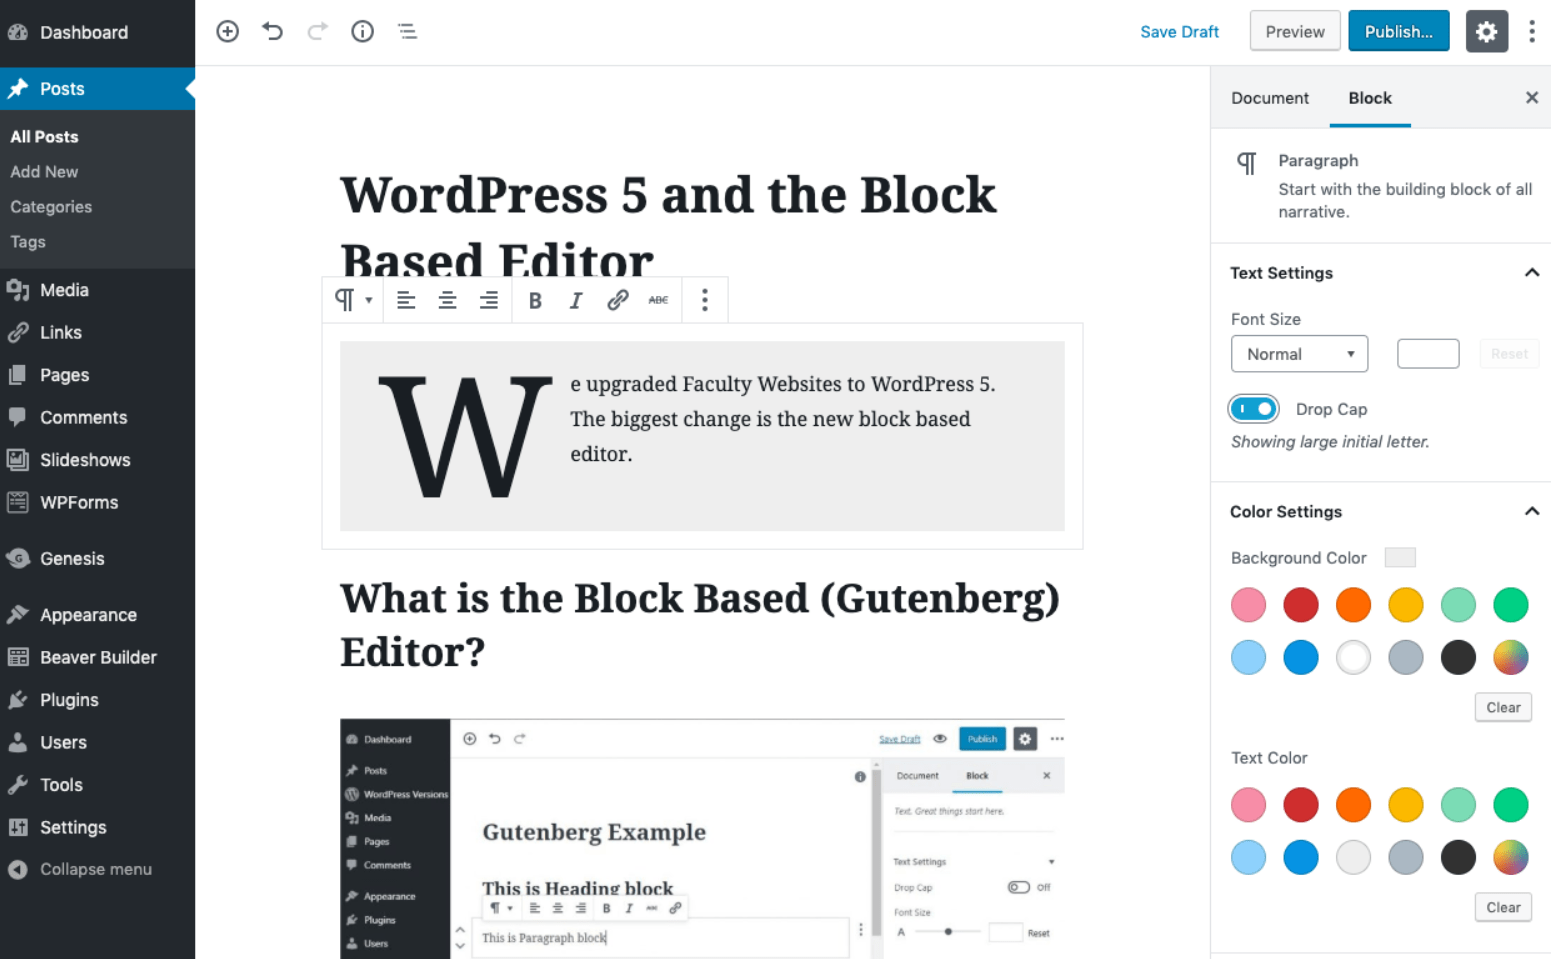 wordpress is an open-source CMS